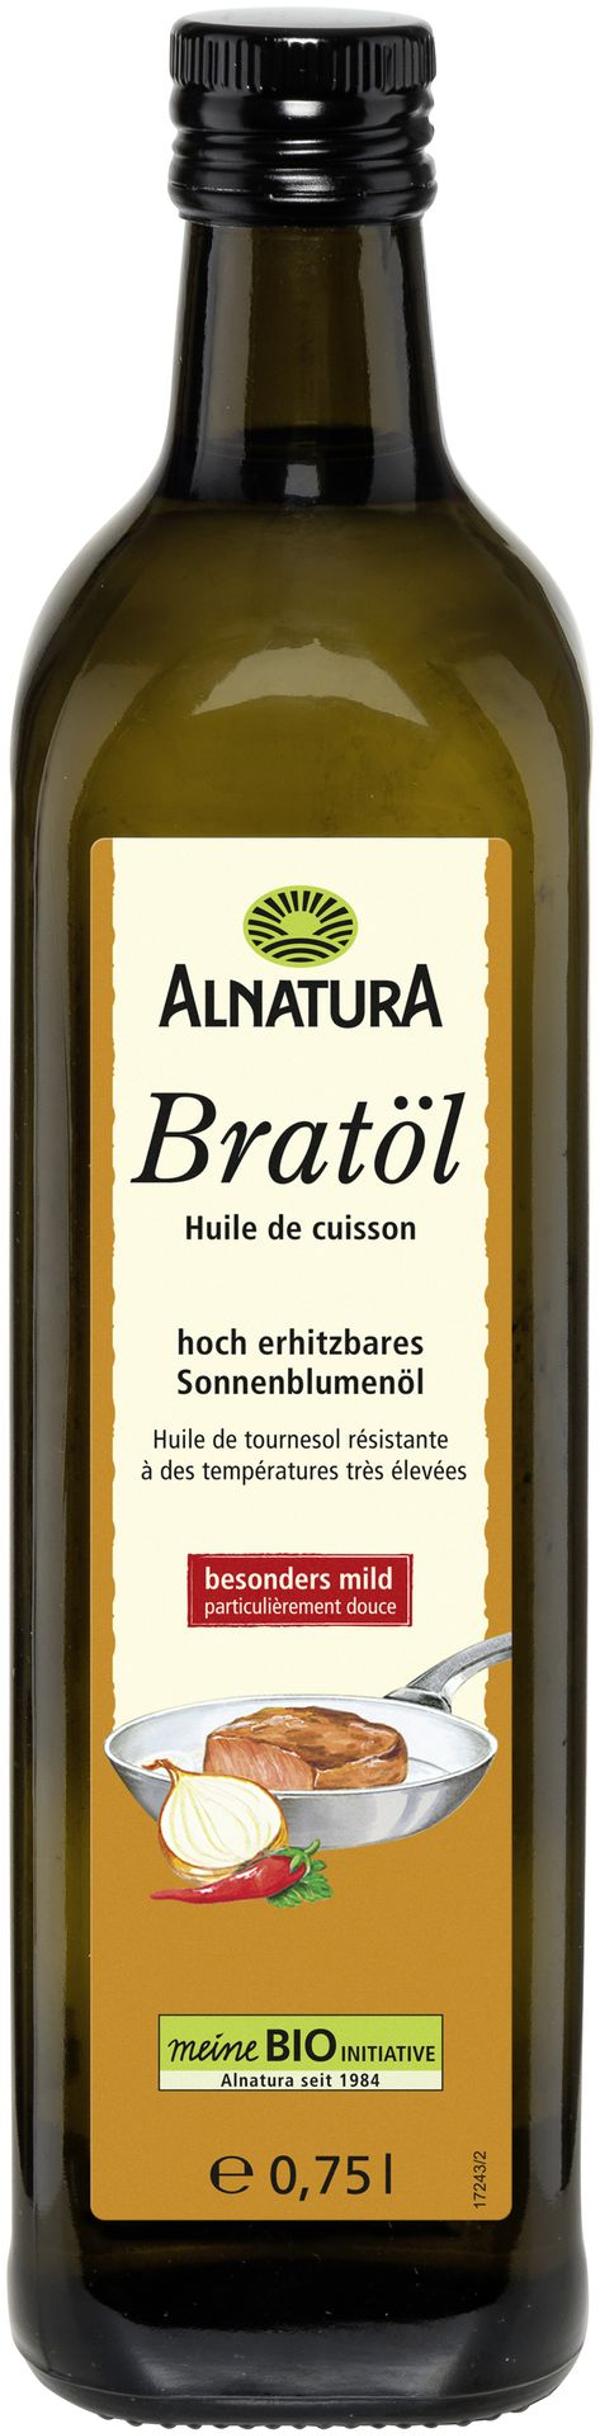 Produktfoto zu Bratöl 750 ml Alnatura